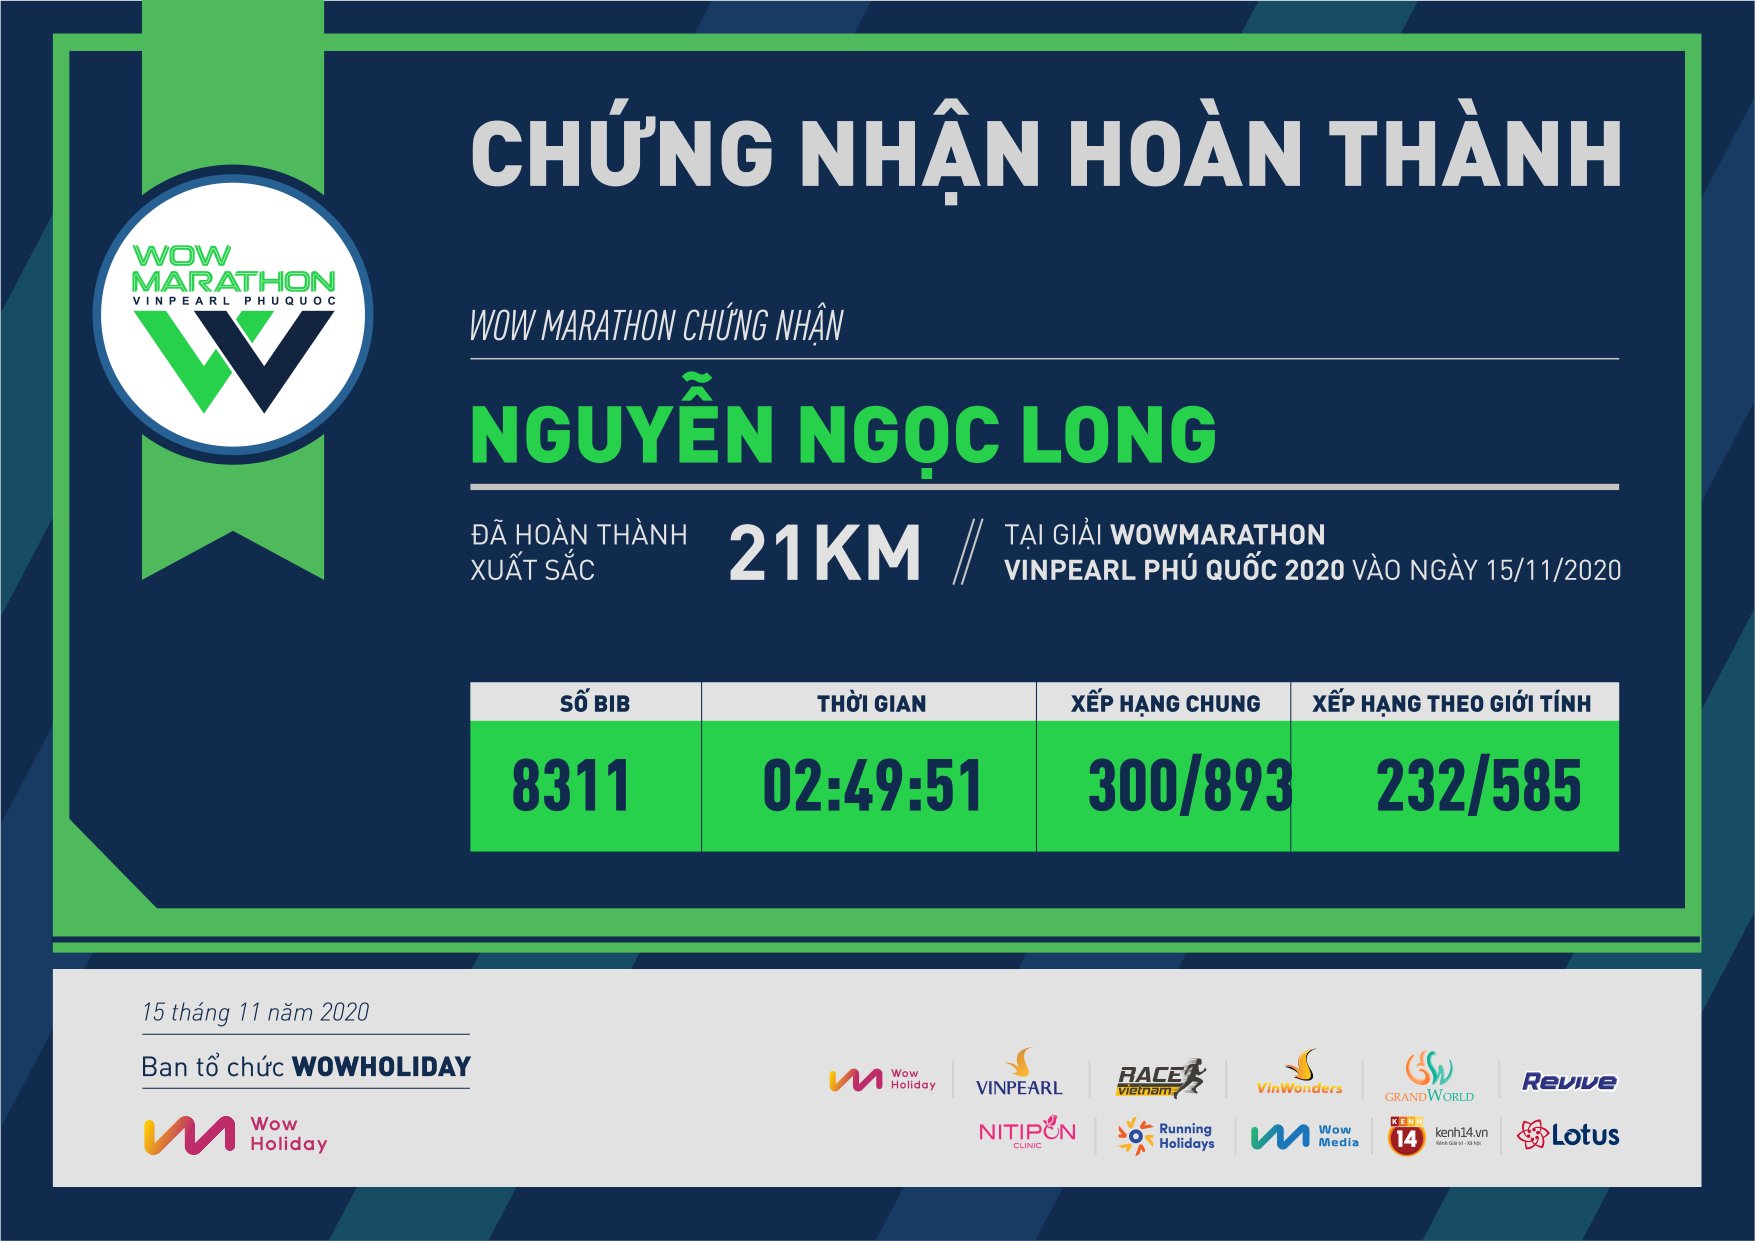 8311 - Nguyễn Ngọc Long